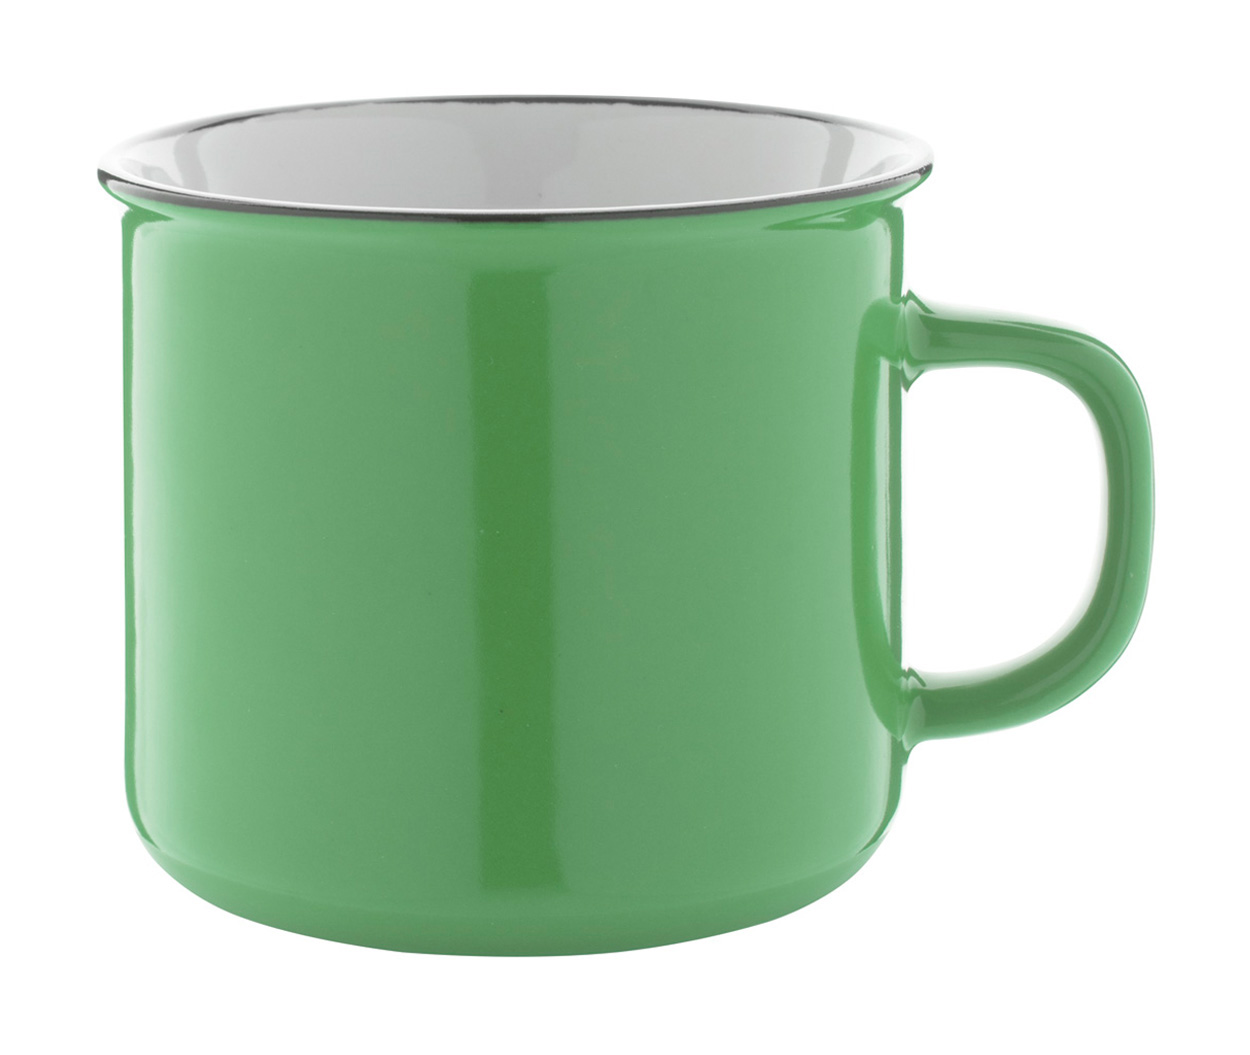 Woodstock retro mug - green